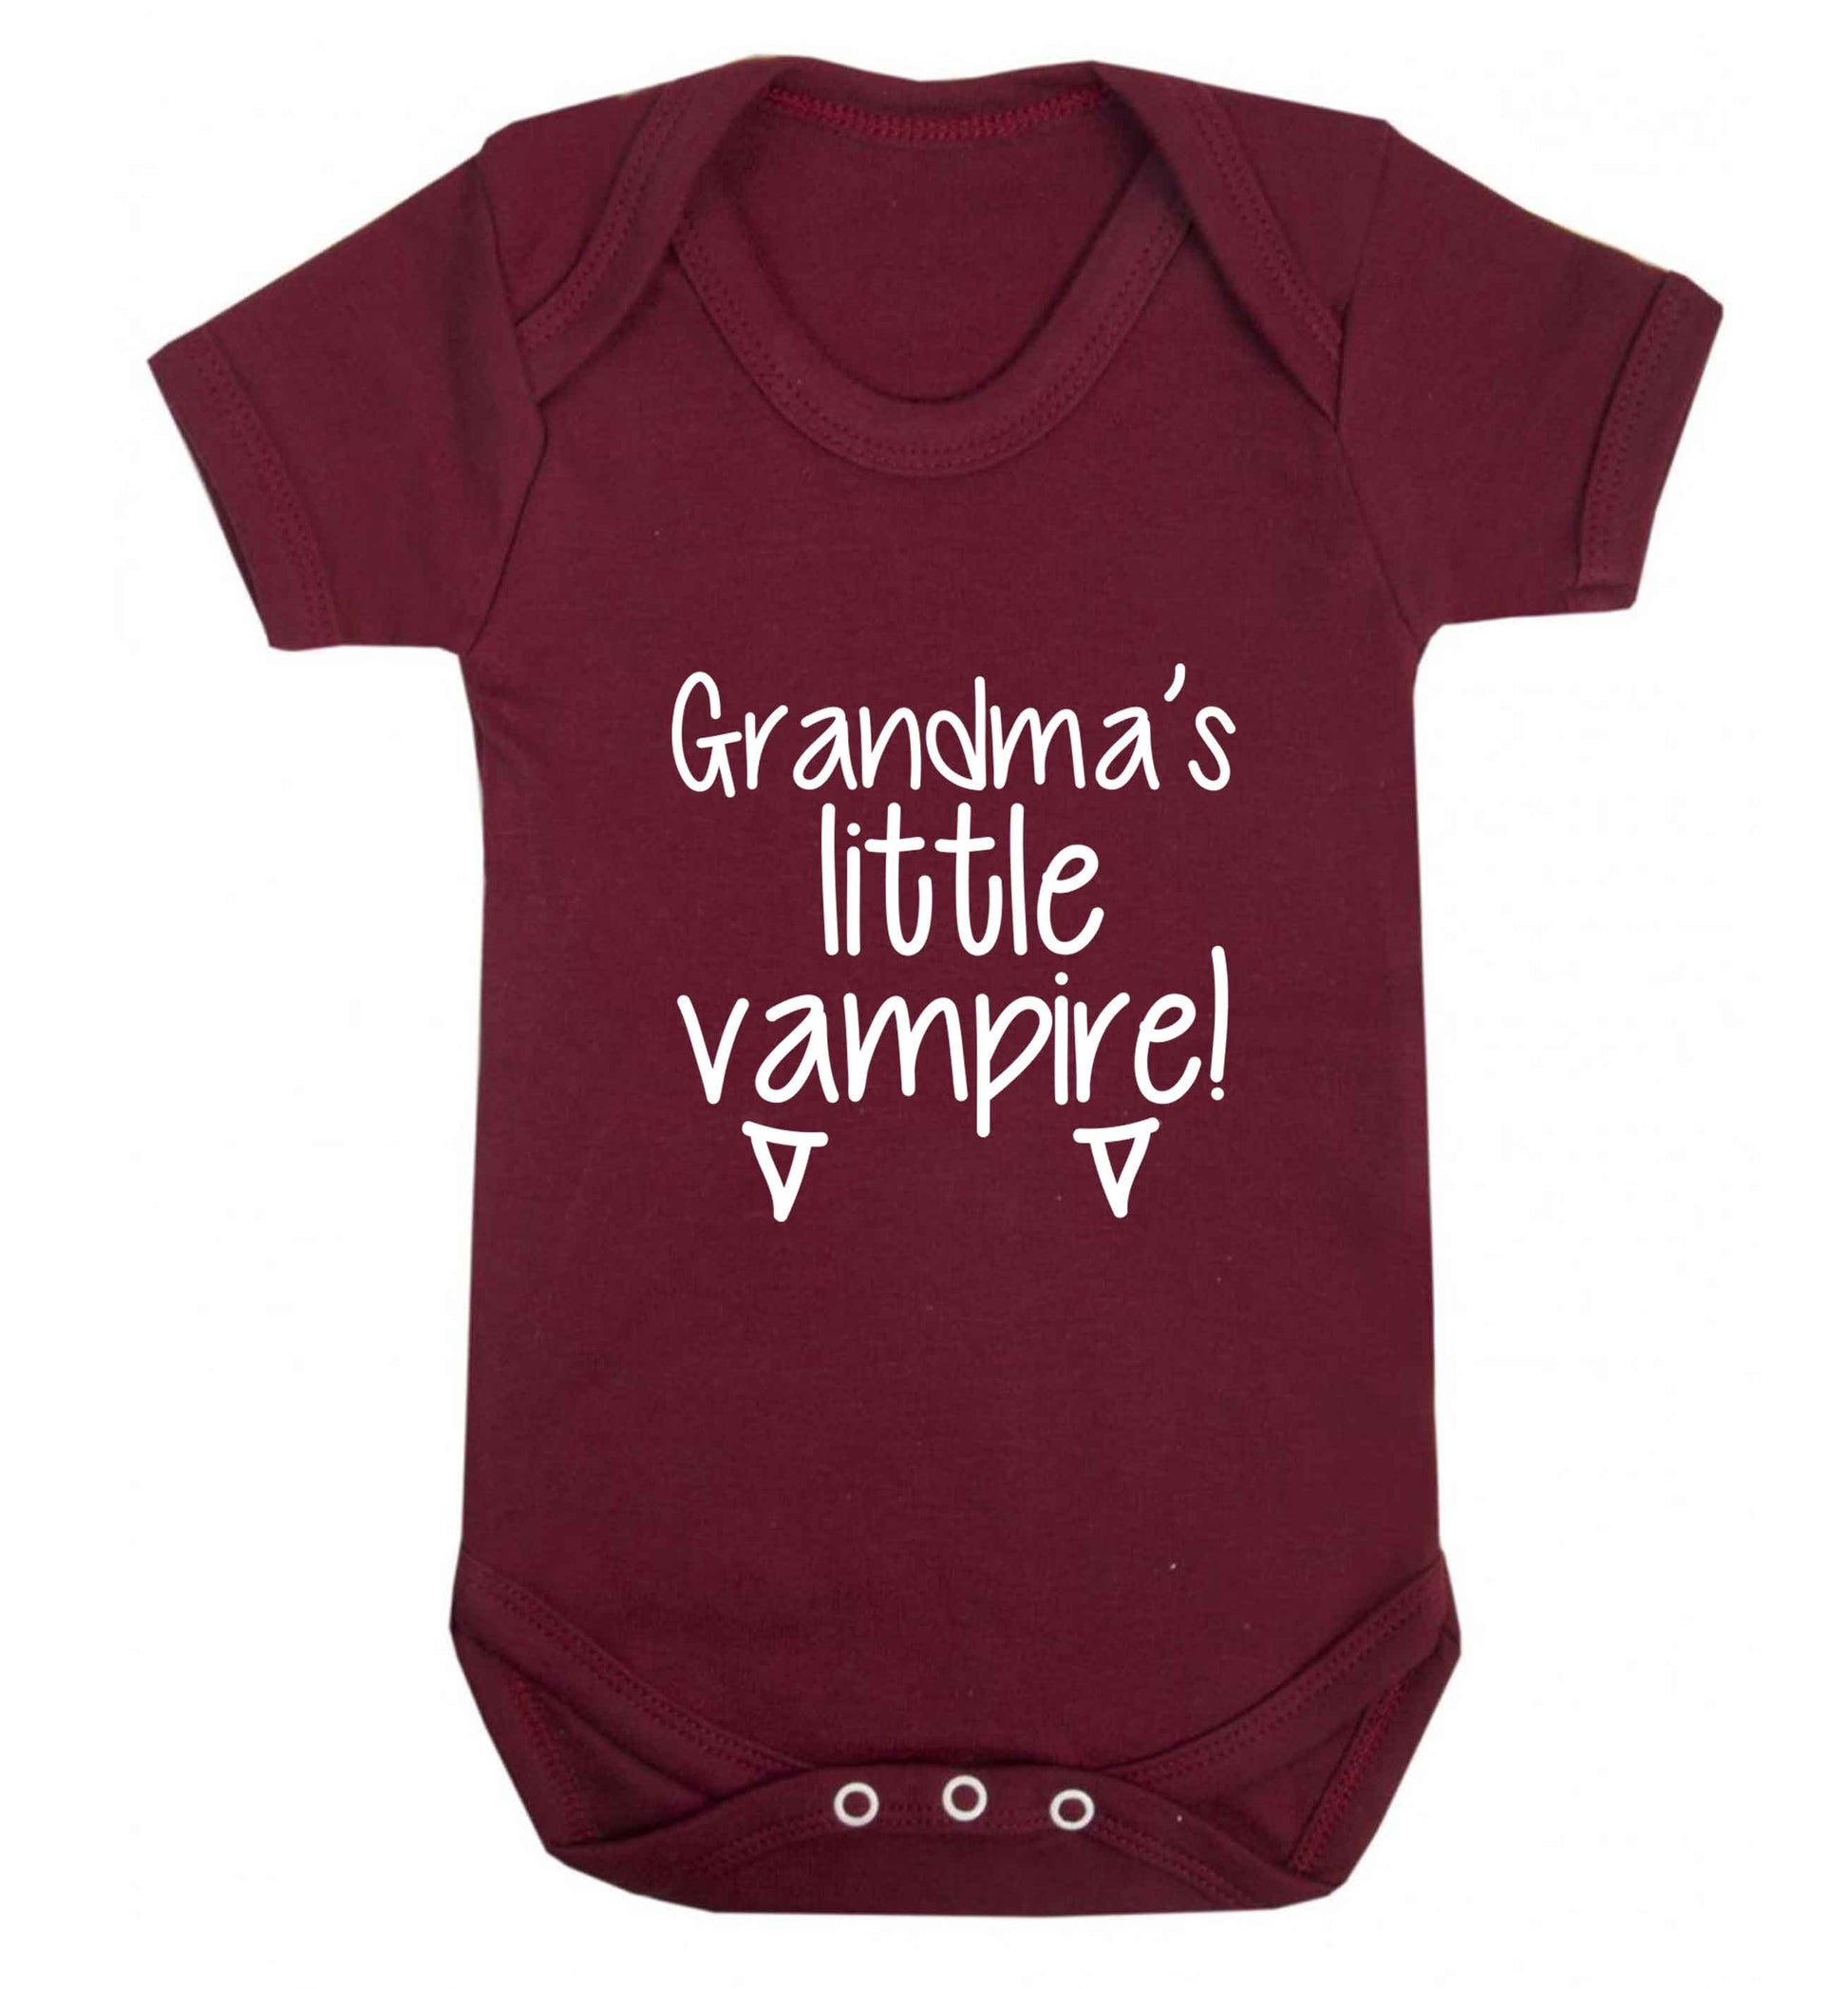 Grandma's little vampire baby vest maroon 18-24 months